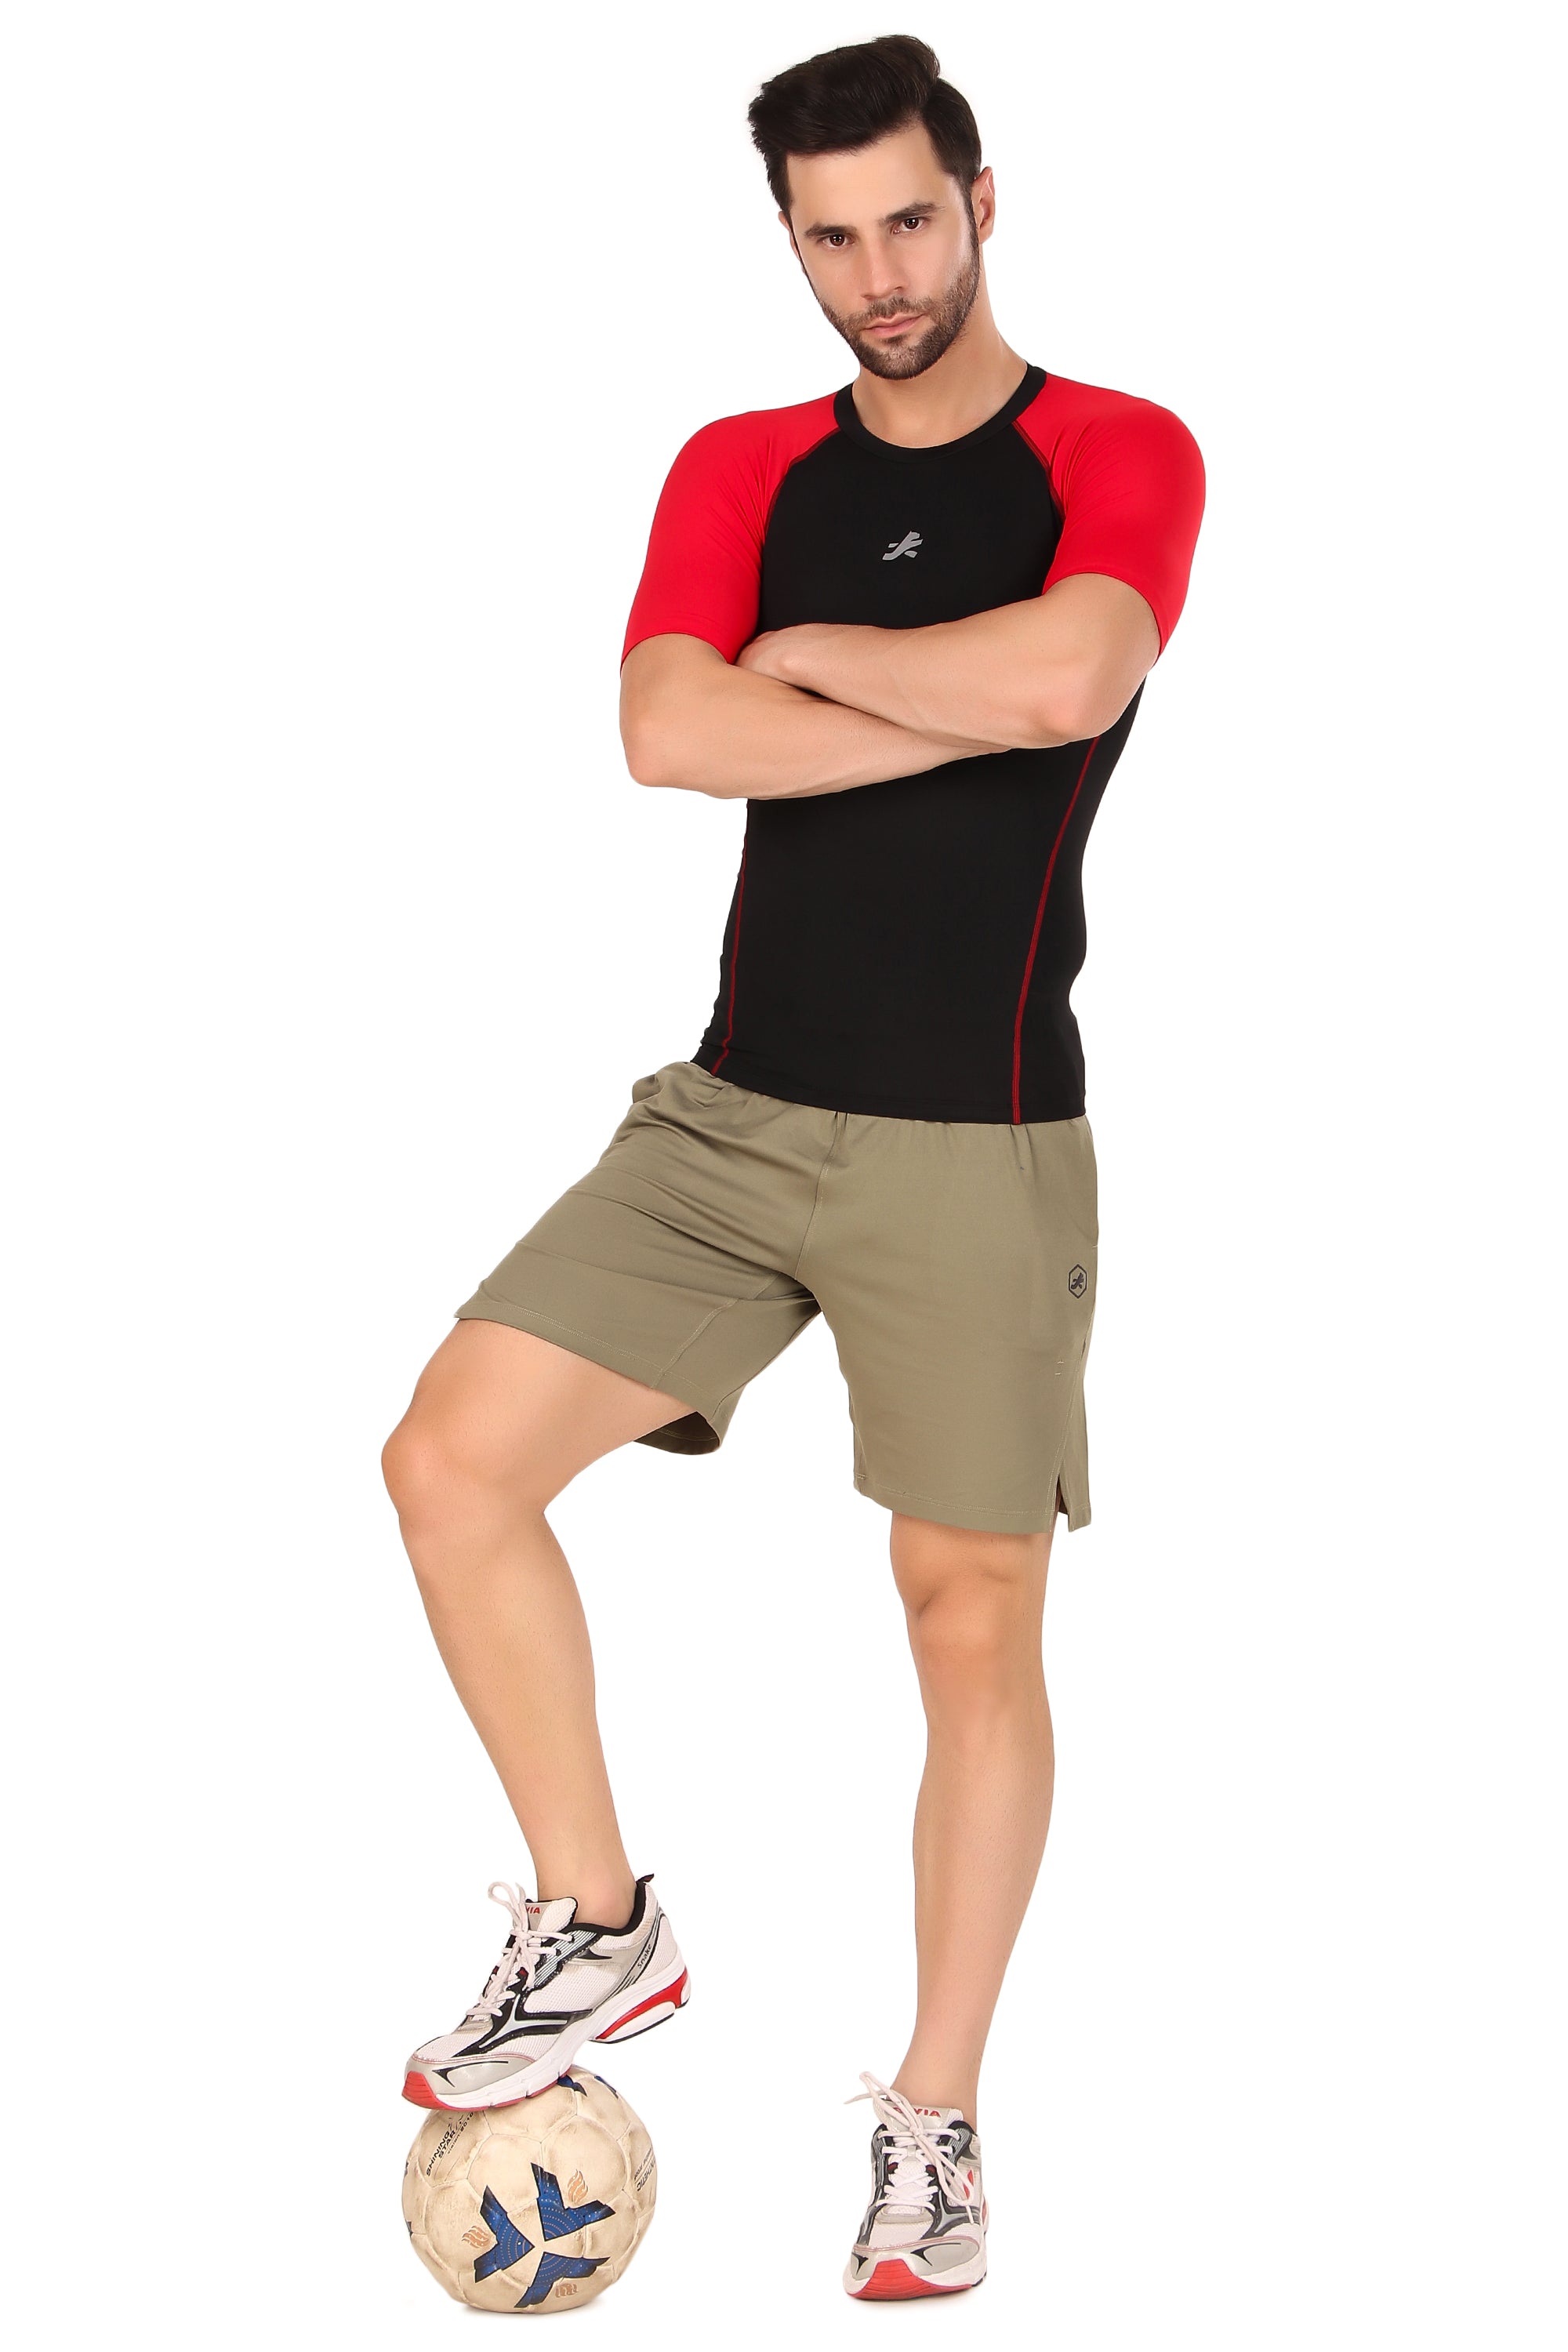 Nylon Compression Tshirt Half Sleeve Tights For Men (Black/Red)